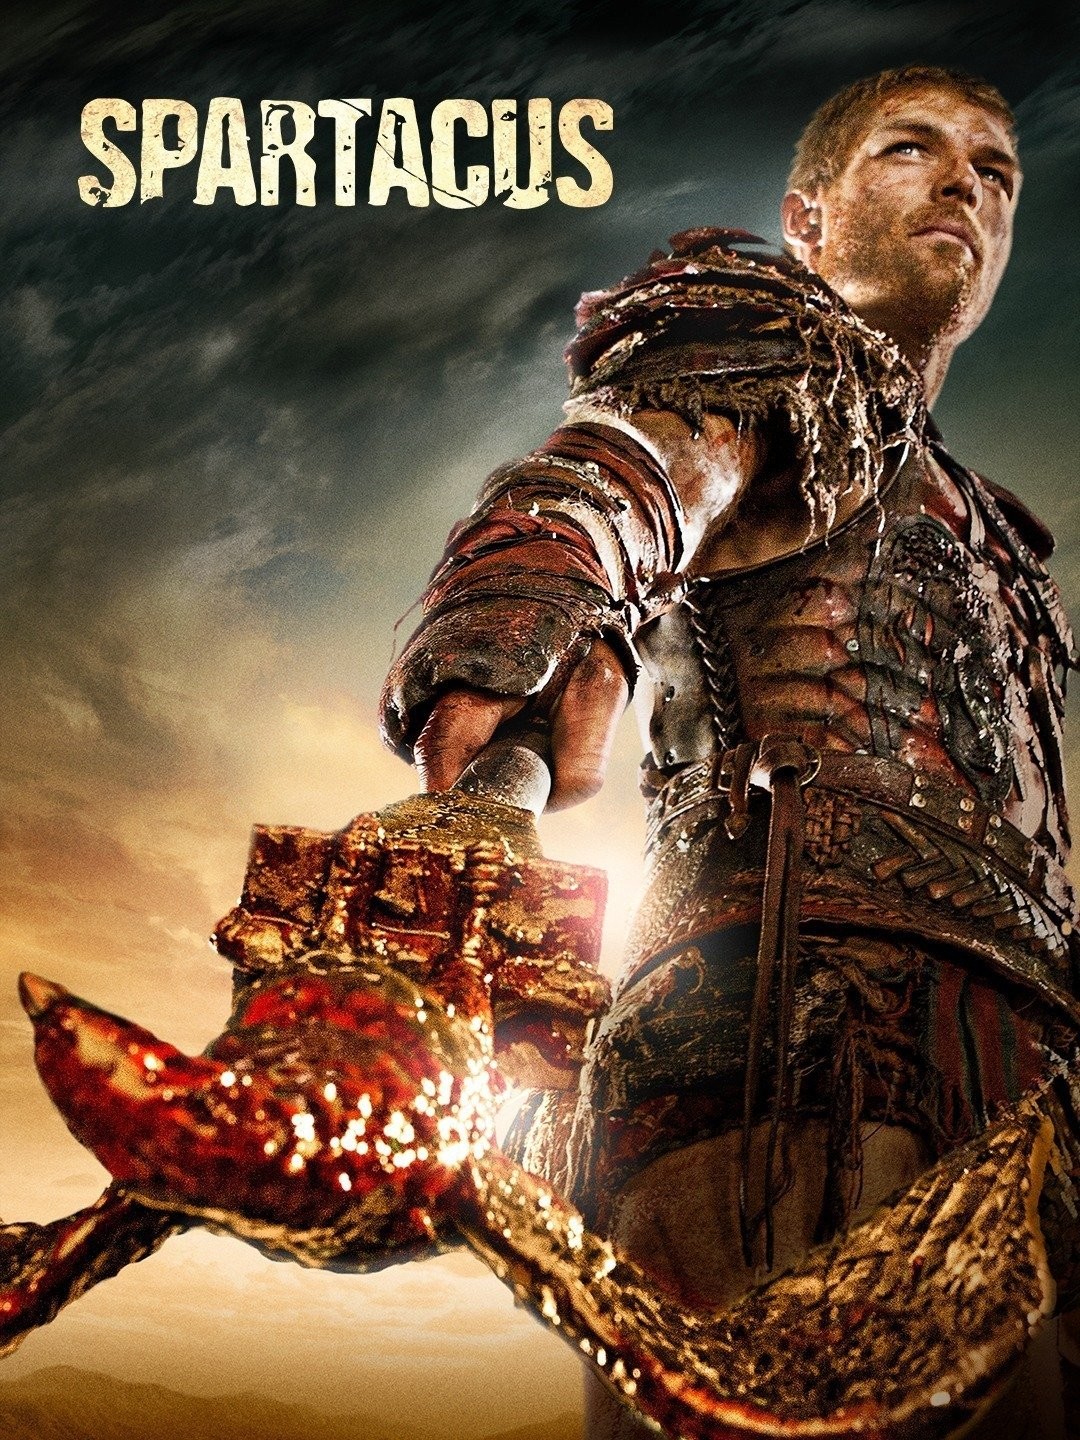 brittany osborn recommends Spartacus Season 4 Episodes